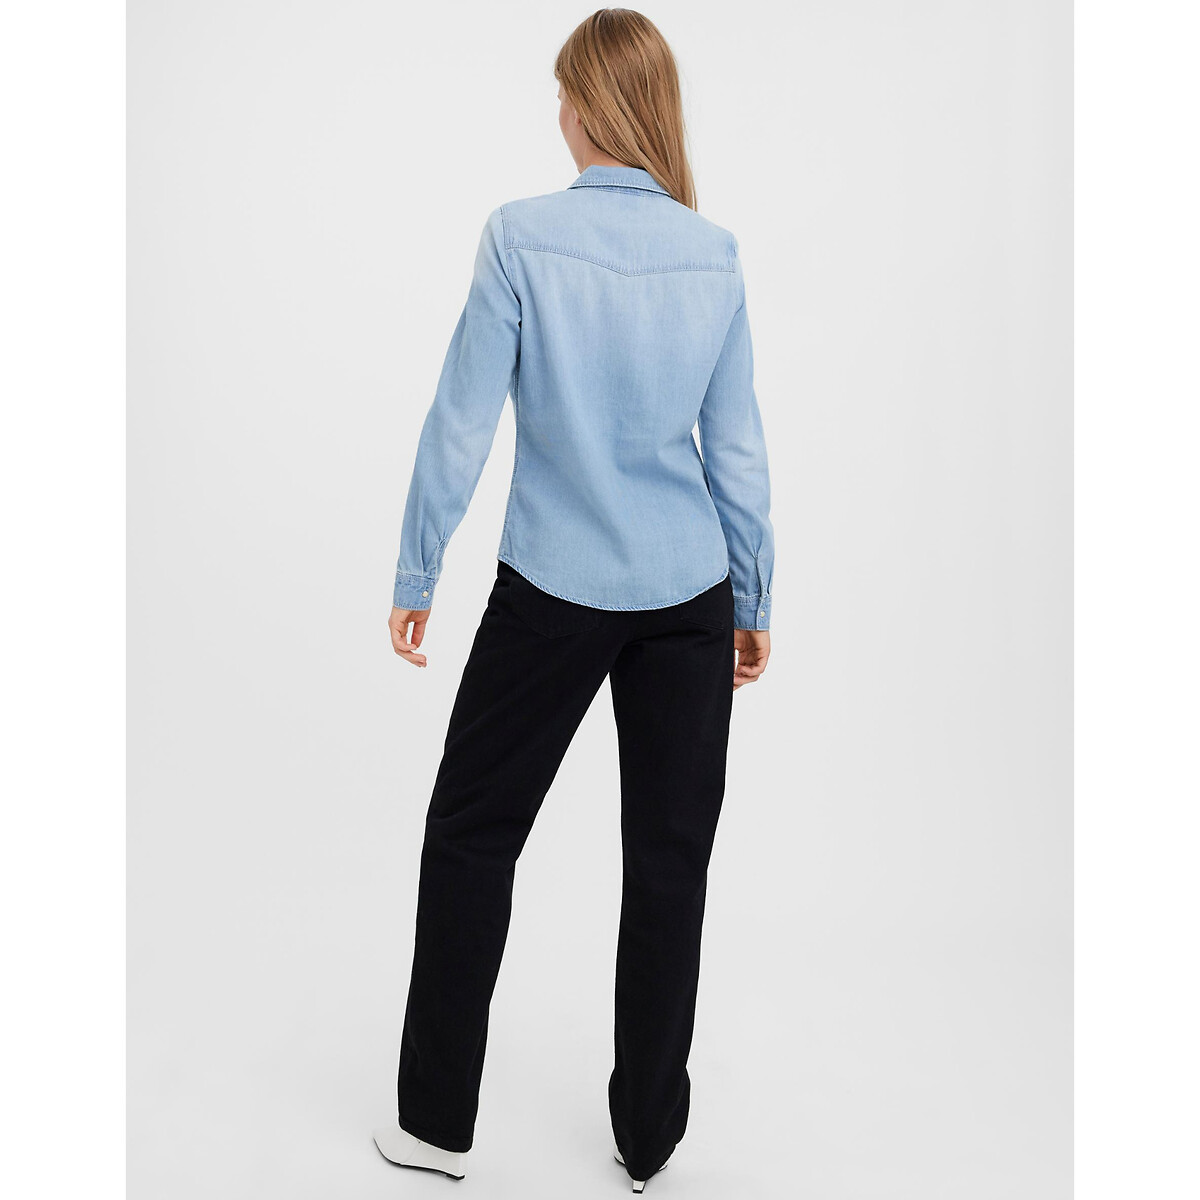 Рубашка Из джинсовой ткани XL синий LaRedoute, размер XL - фото 3